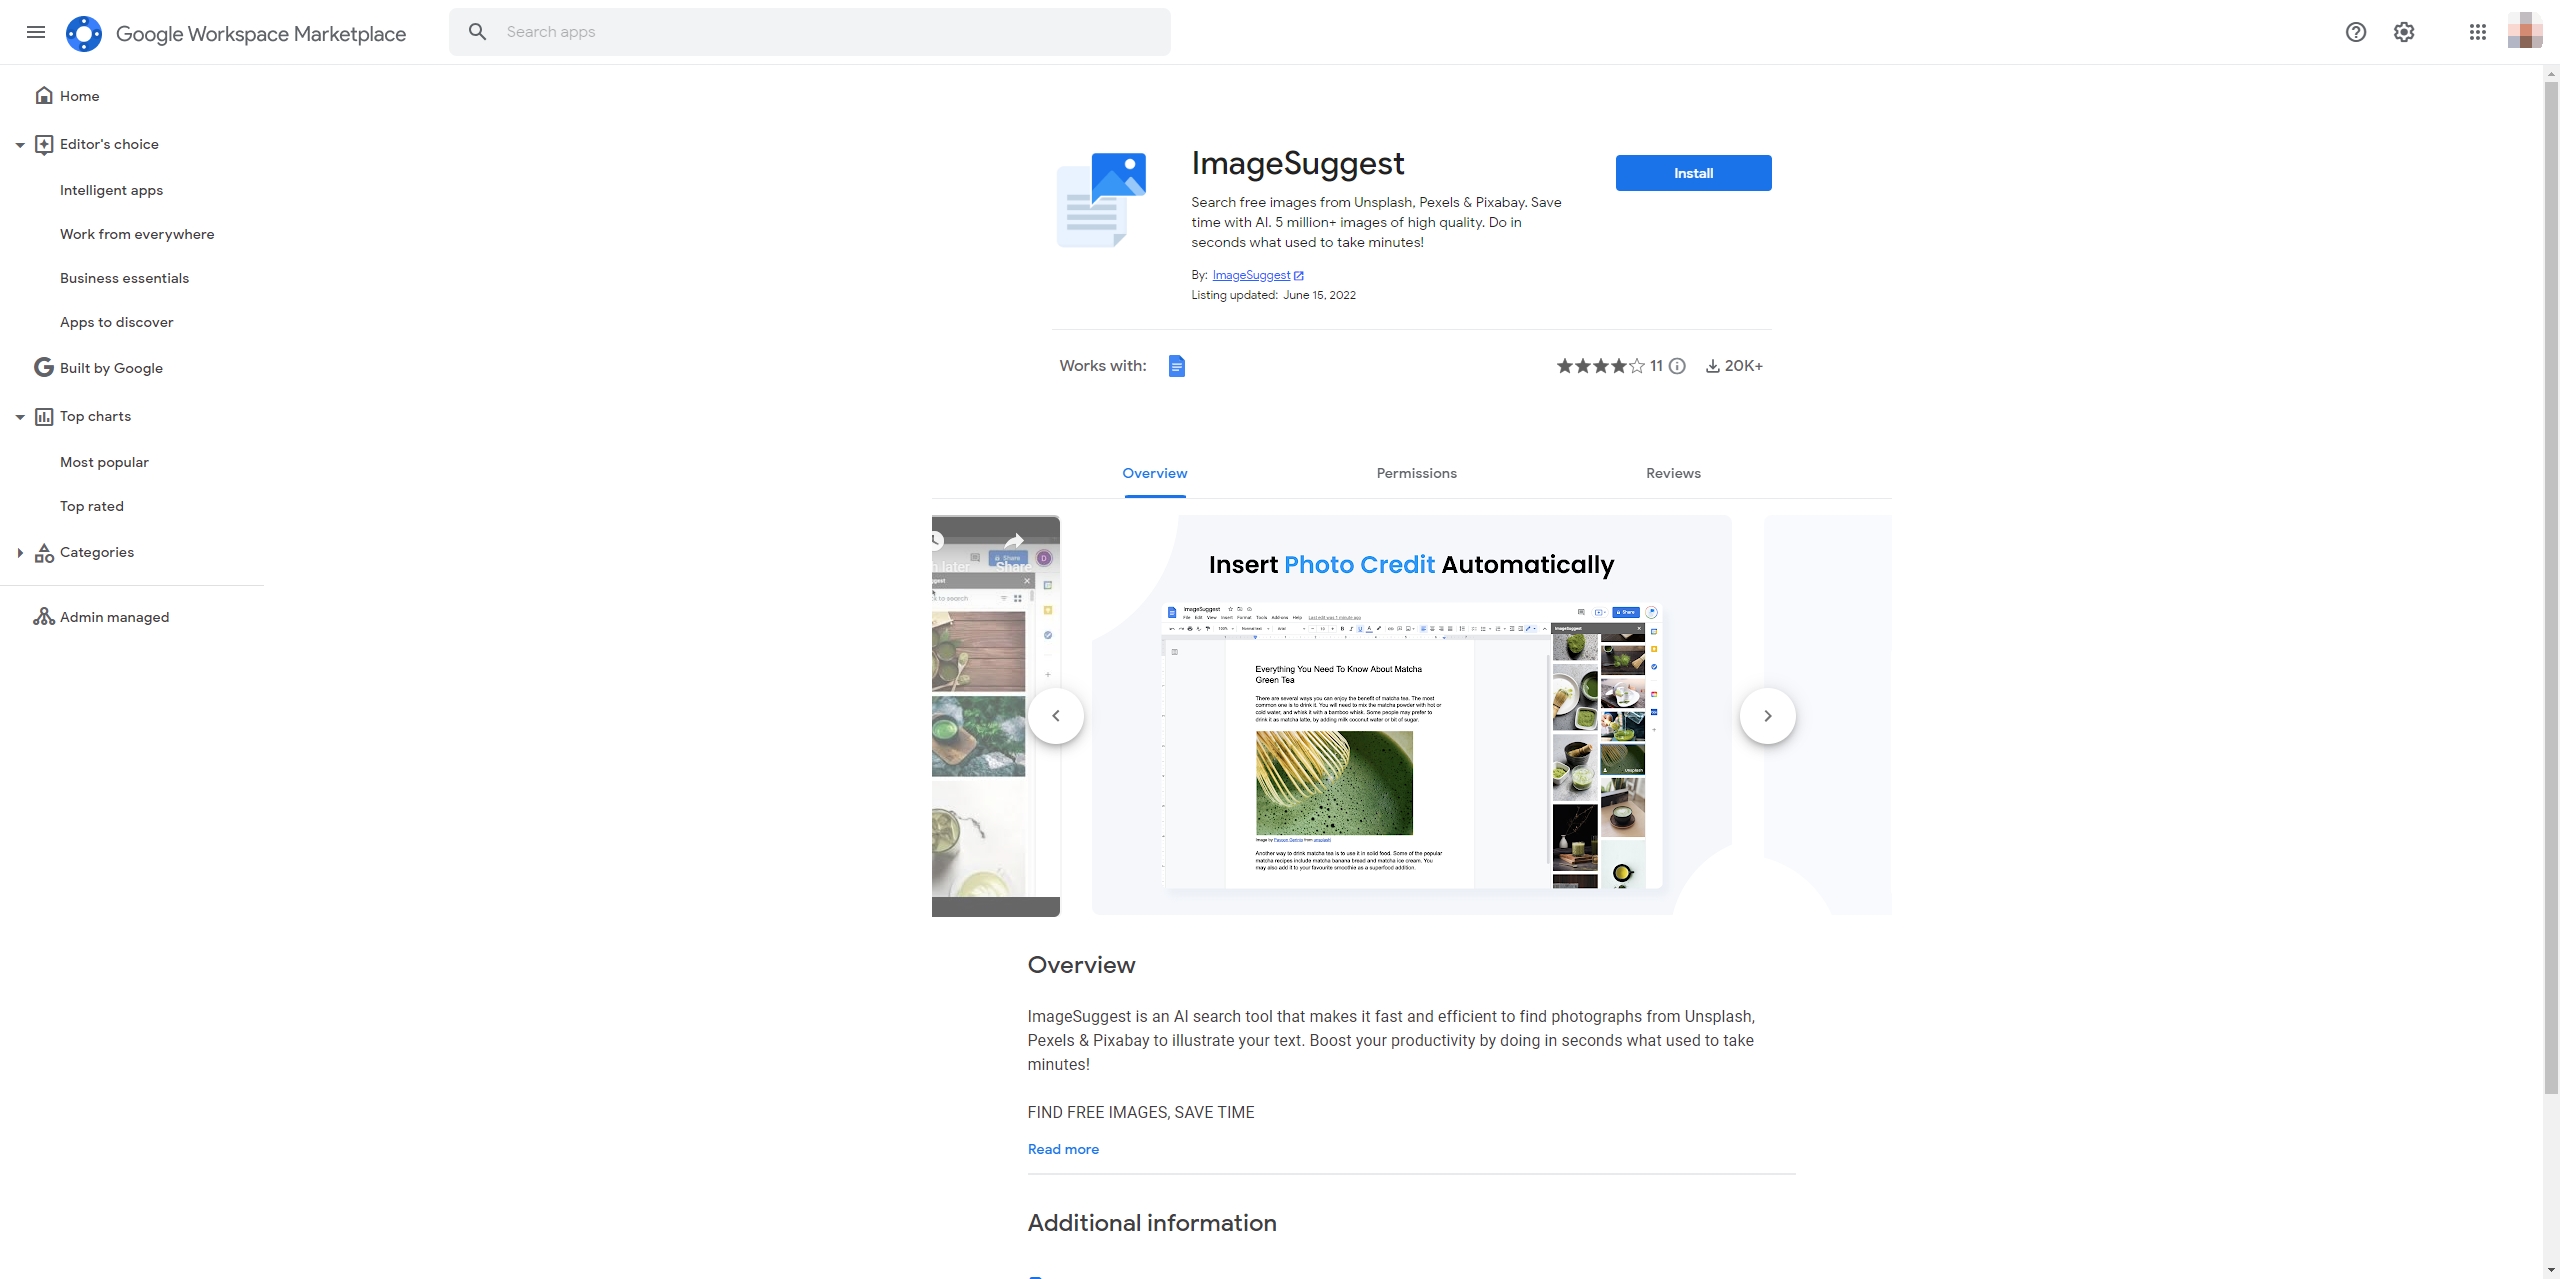 install ImageSuggest